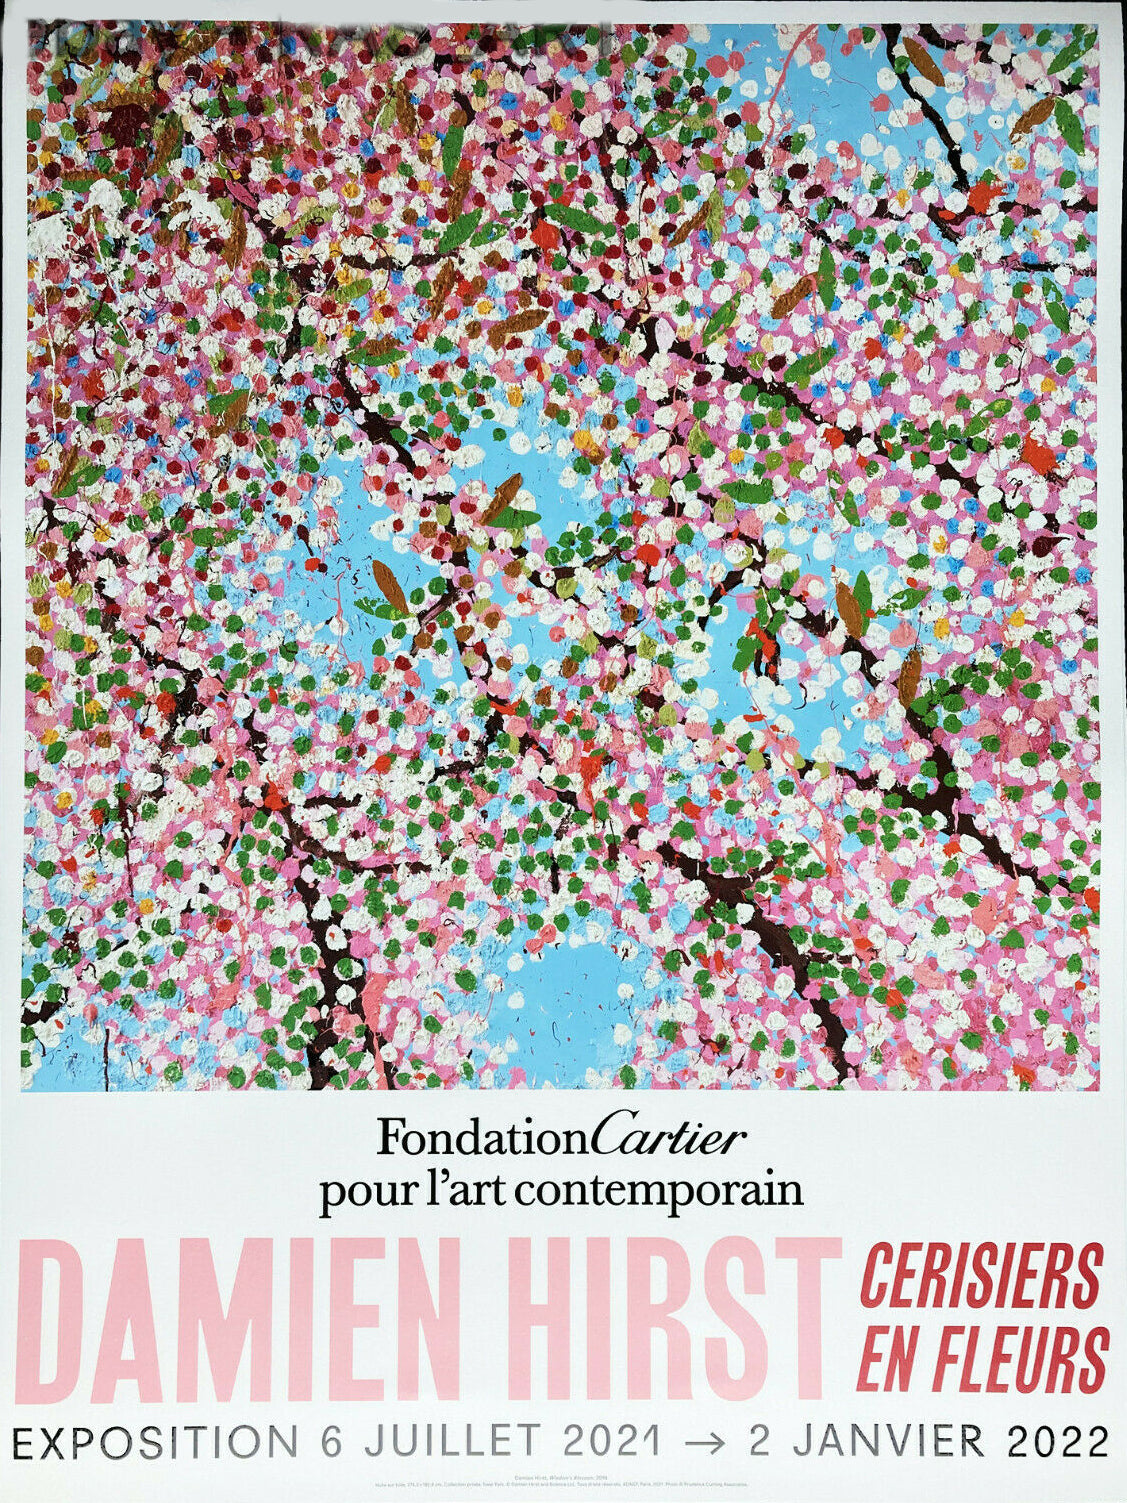 Damien Hirst - Cherry Blossom - Fondation Cartier Paris ©, Exhibition poster 1/6